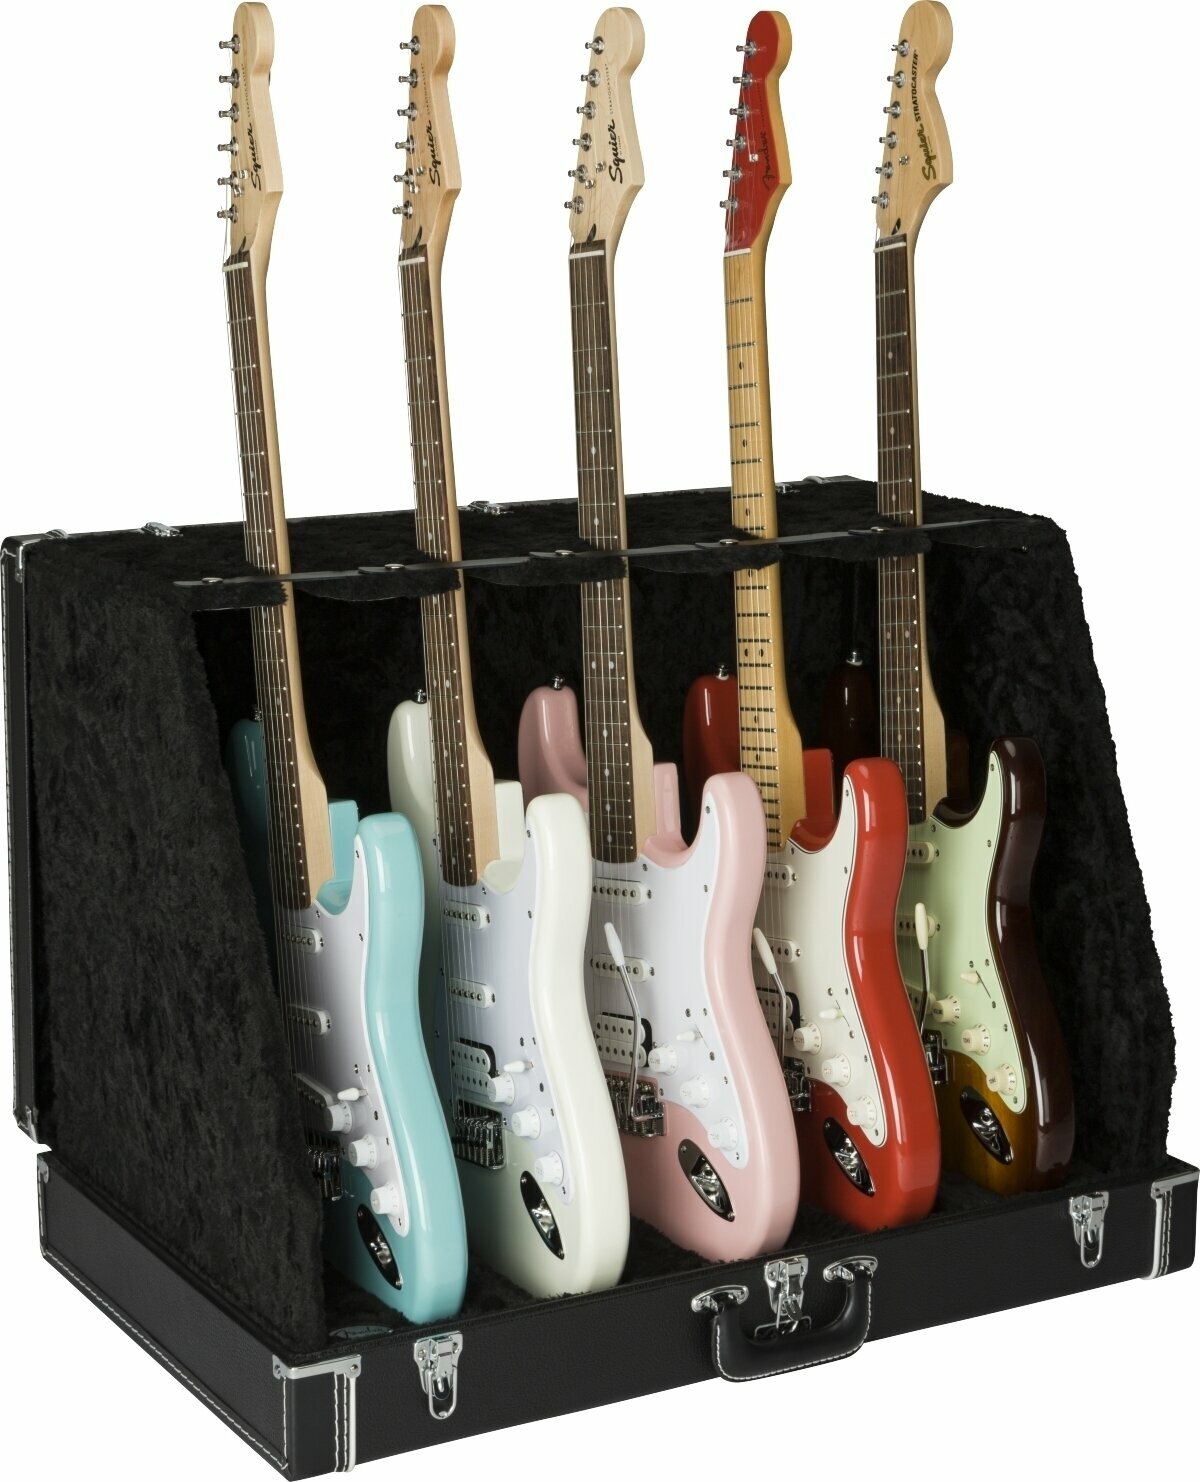 Fender Classic Series Case Stand 5 Black Stojan pro více kytar Fender